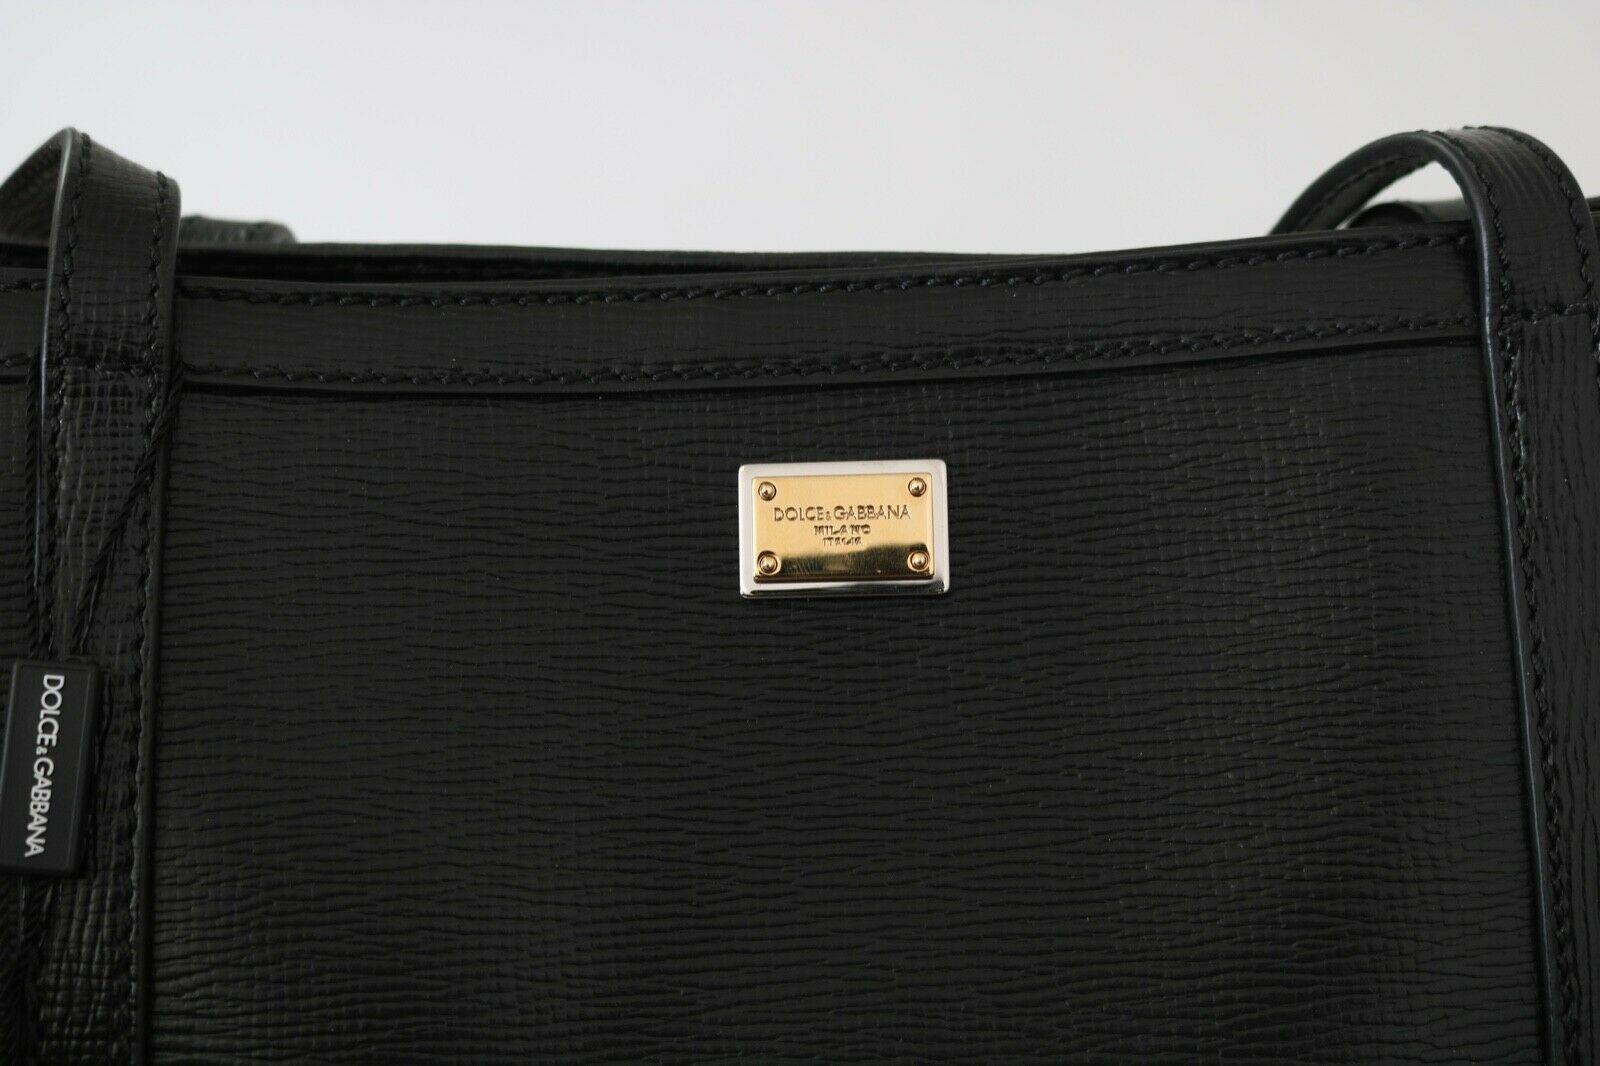 Dolce & Gabbana Black Leather Shopping Tote Bag Handbag Top Handle Bag 2